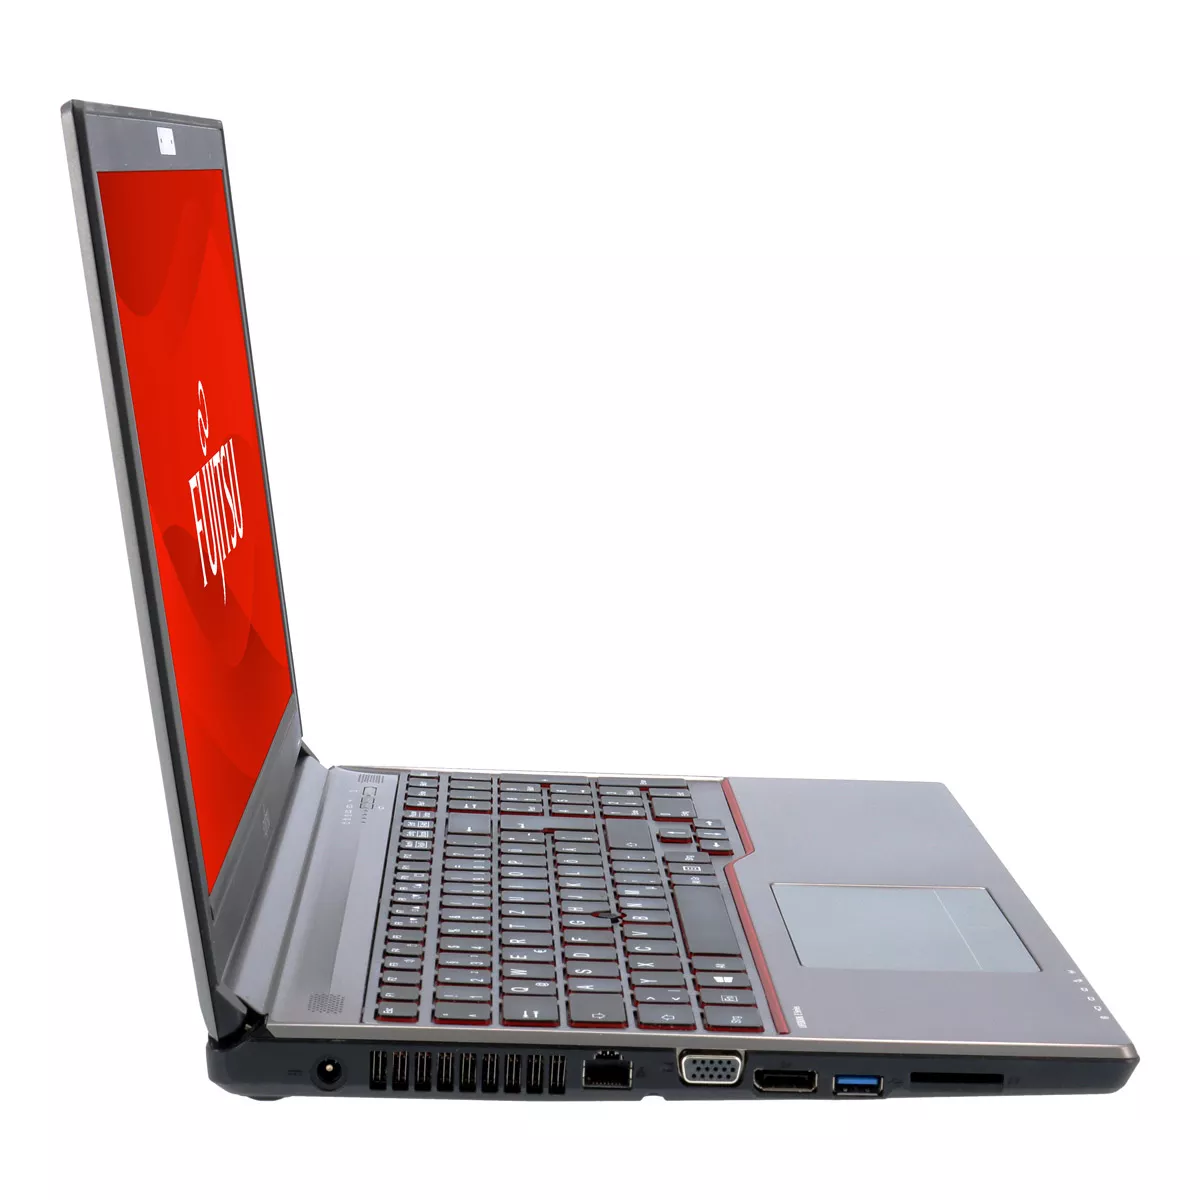 Fujitsu Lifebook E756 Core i5 6200U 8 GB DDR4 240 GB SSD Webcam B-Ware